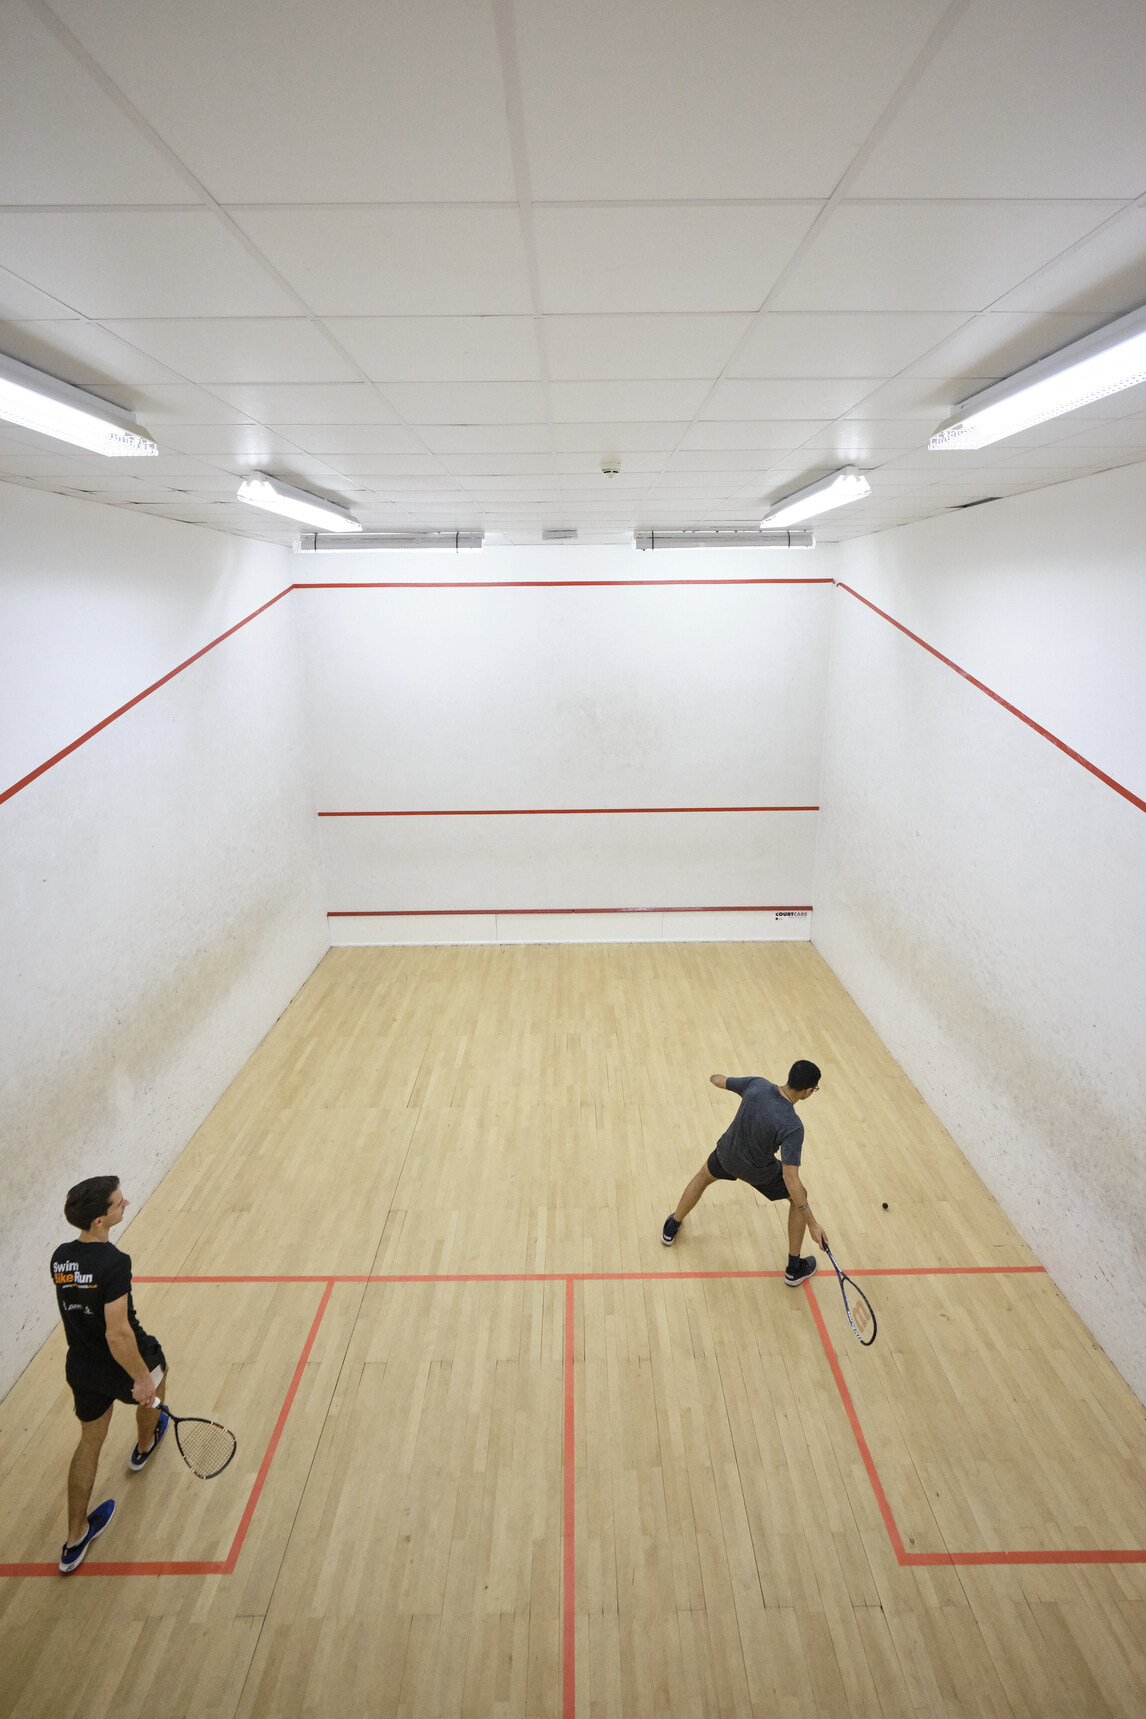 Christ's College, Cambridge playing squash